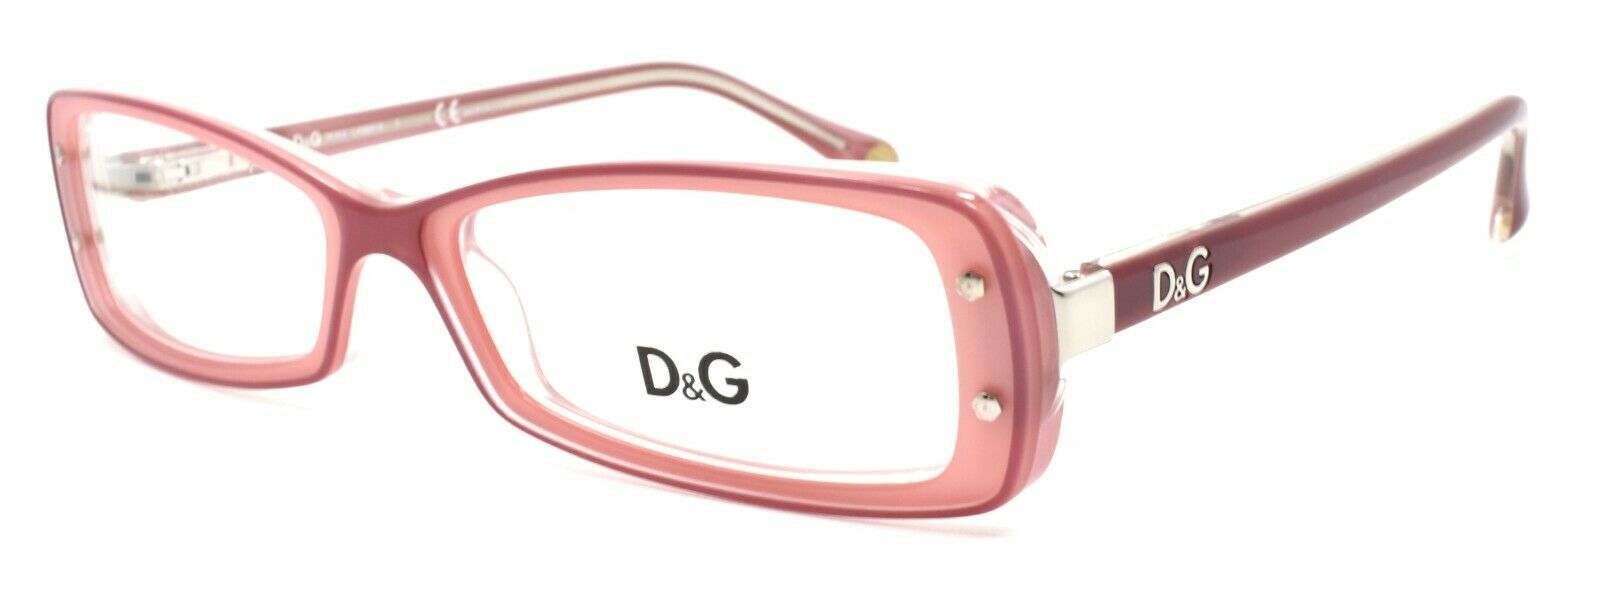 1-Dolce & Gabbana D&G 1227 1980 Women's Eyeglasses Frames 51-16-135 Marc On Pink-679420461083-IKSpecs